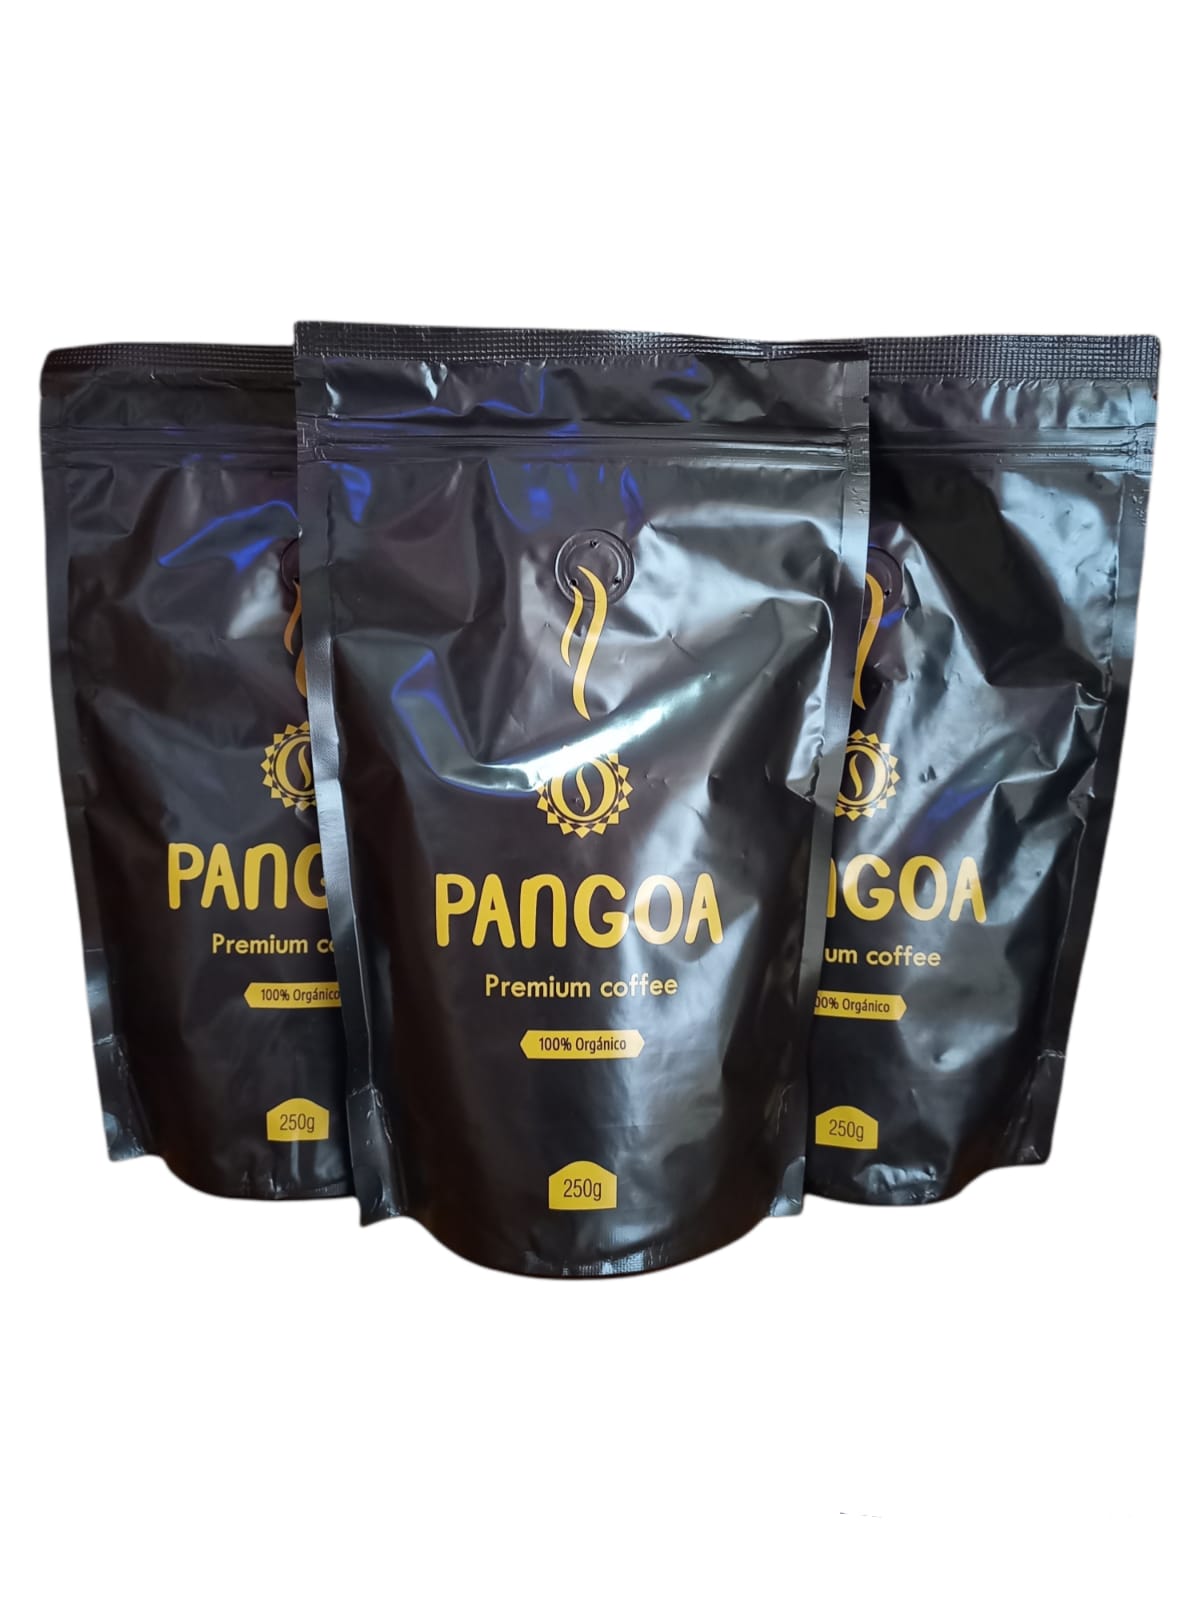 Producto Pangoa Premium Coffe 250g